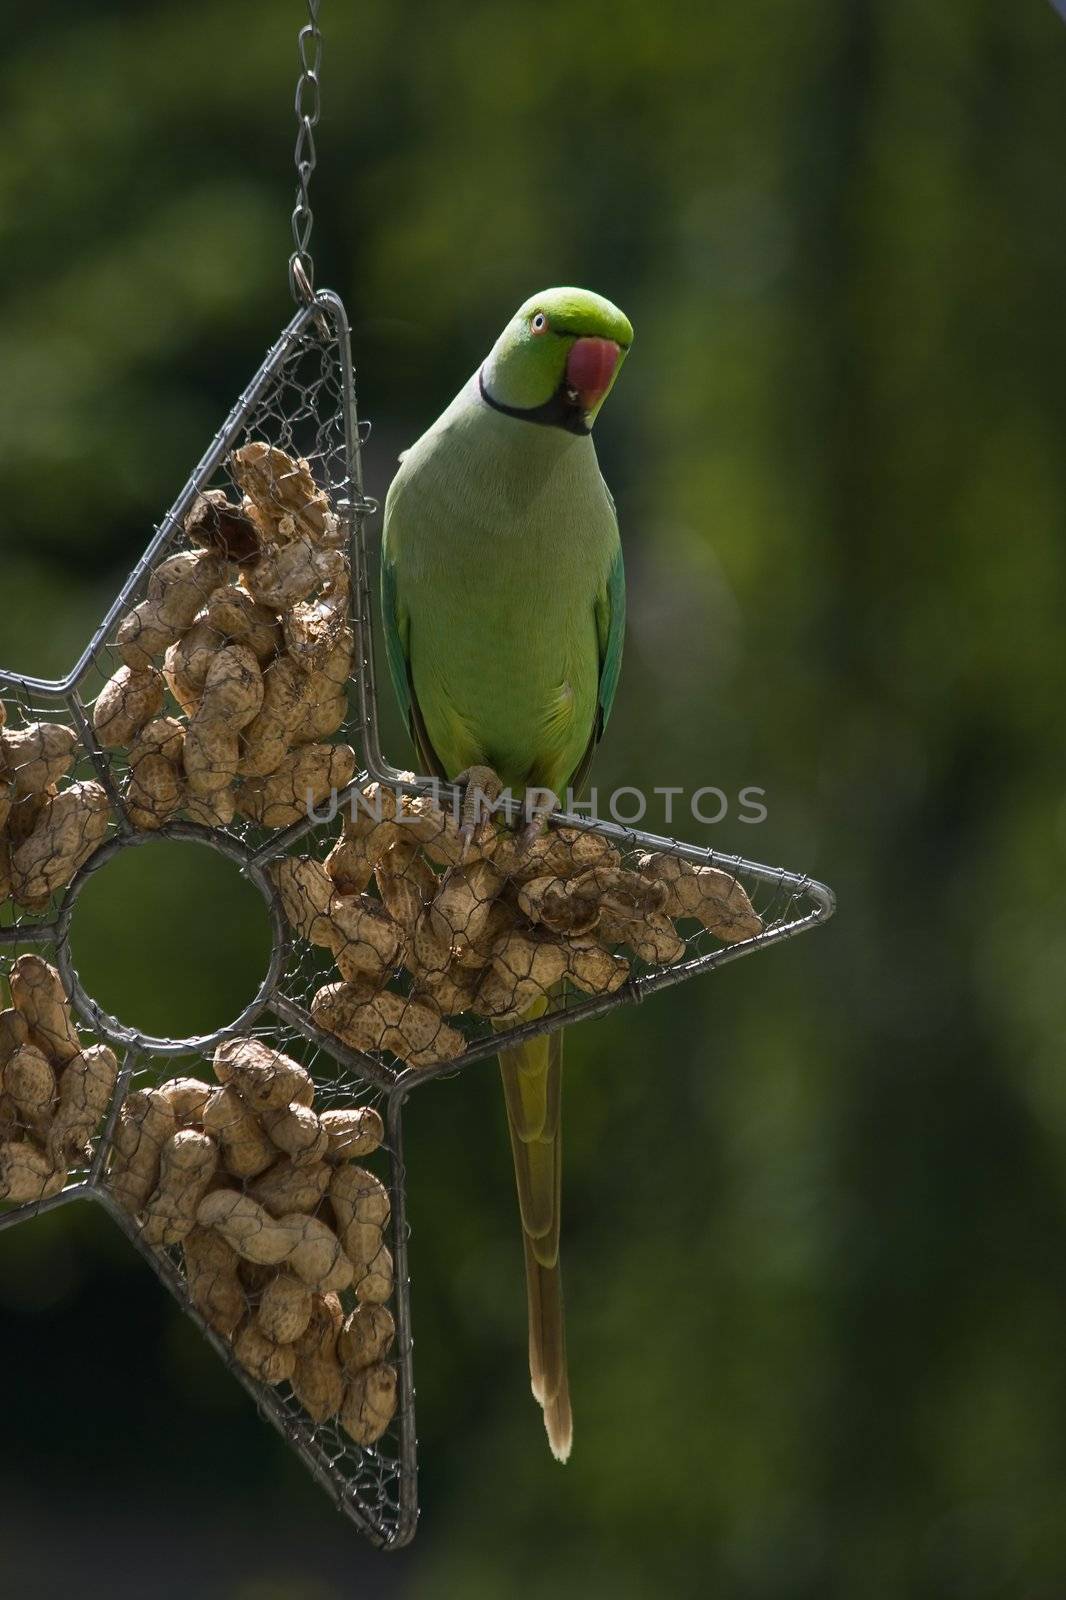 Rose-ringed parakeet or ringnecked parakeet sitting on feeding hanger filled with peanuts